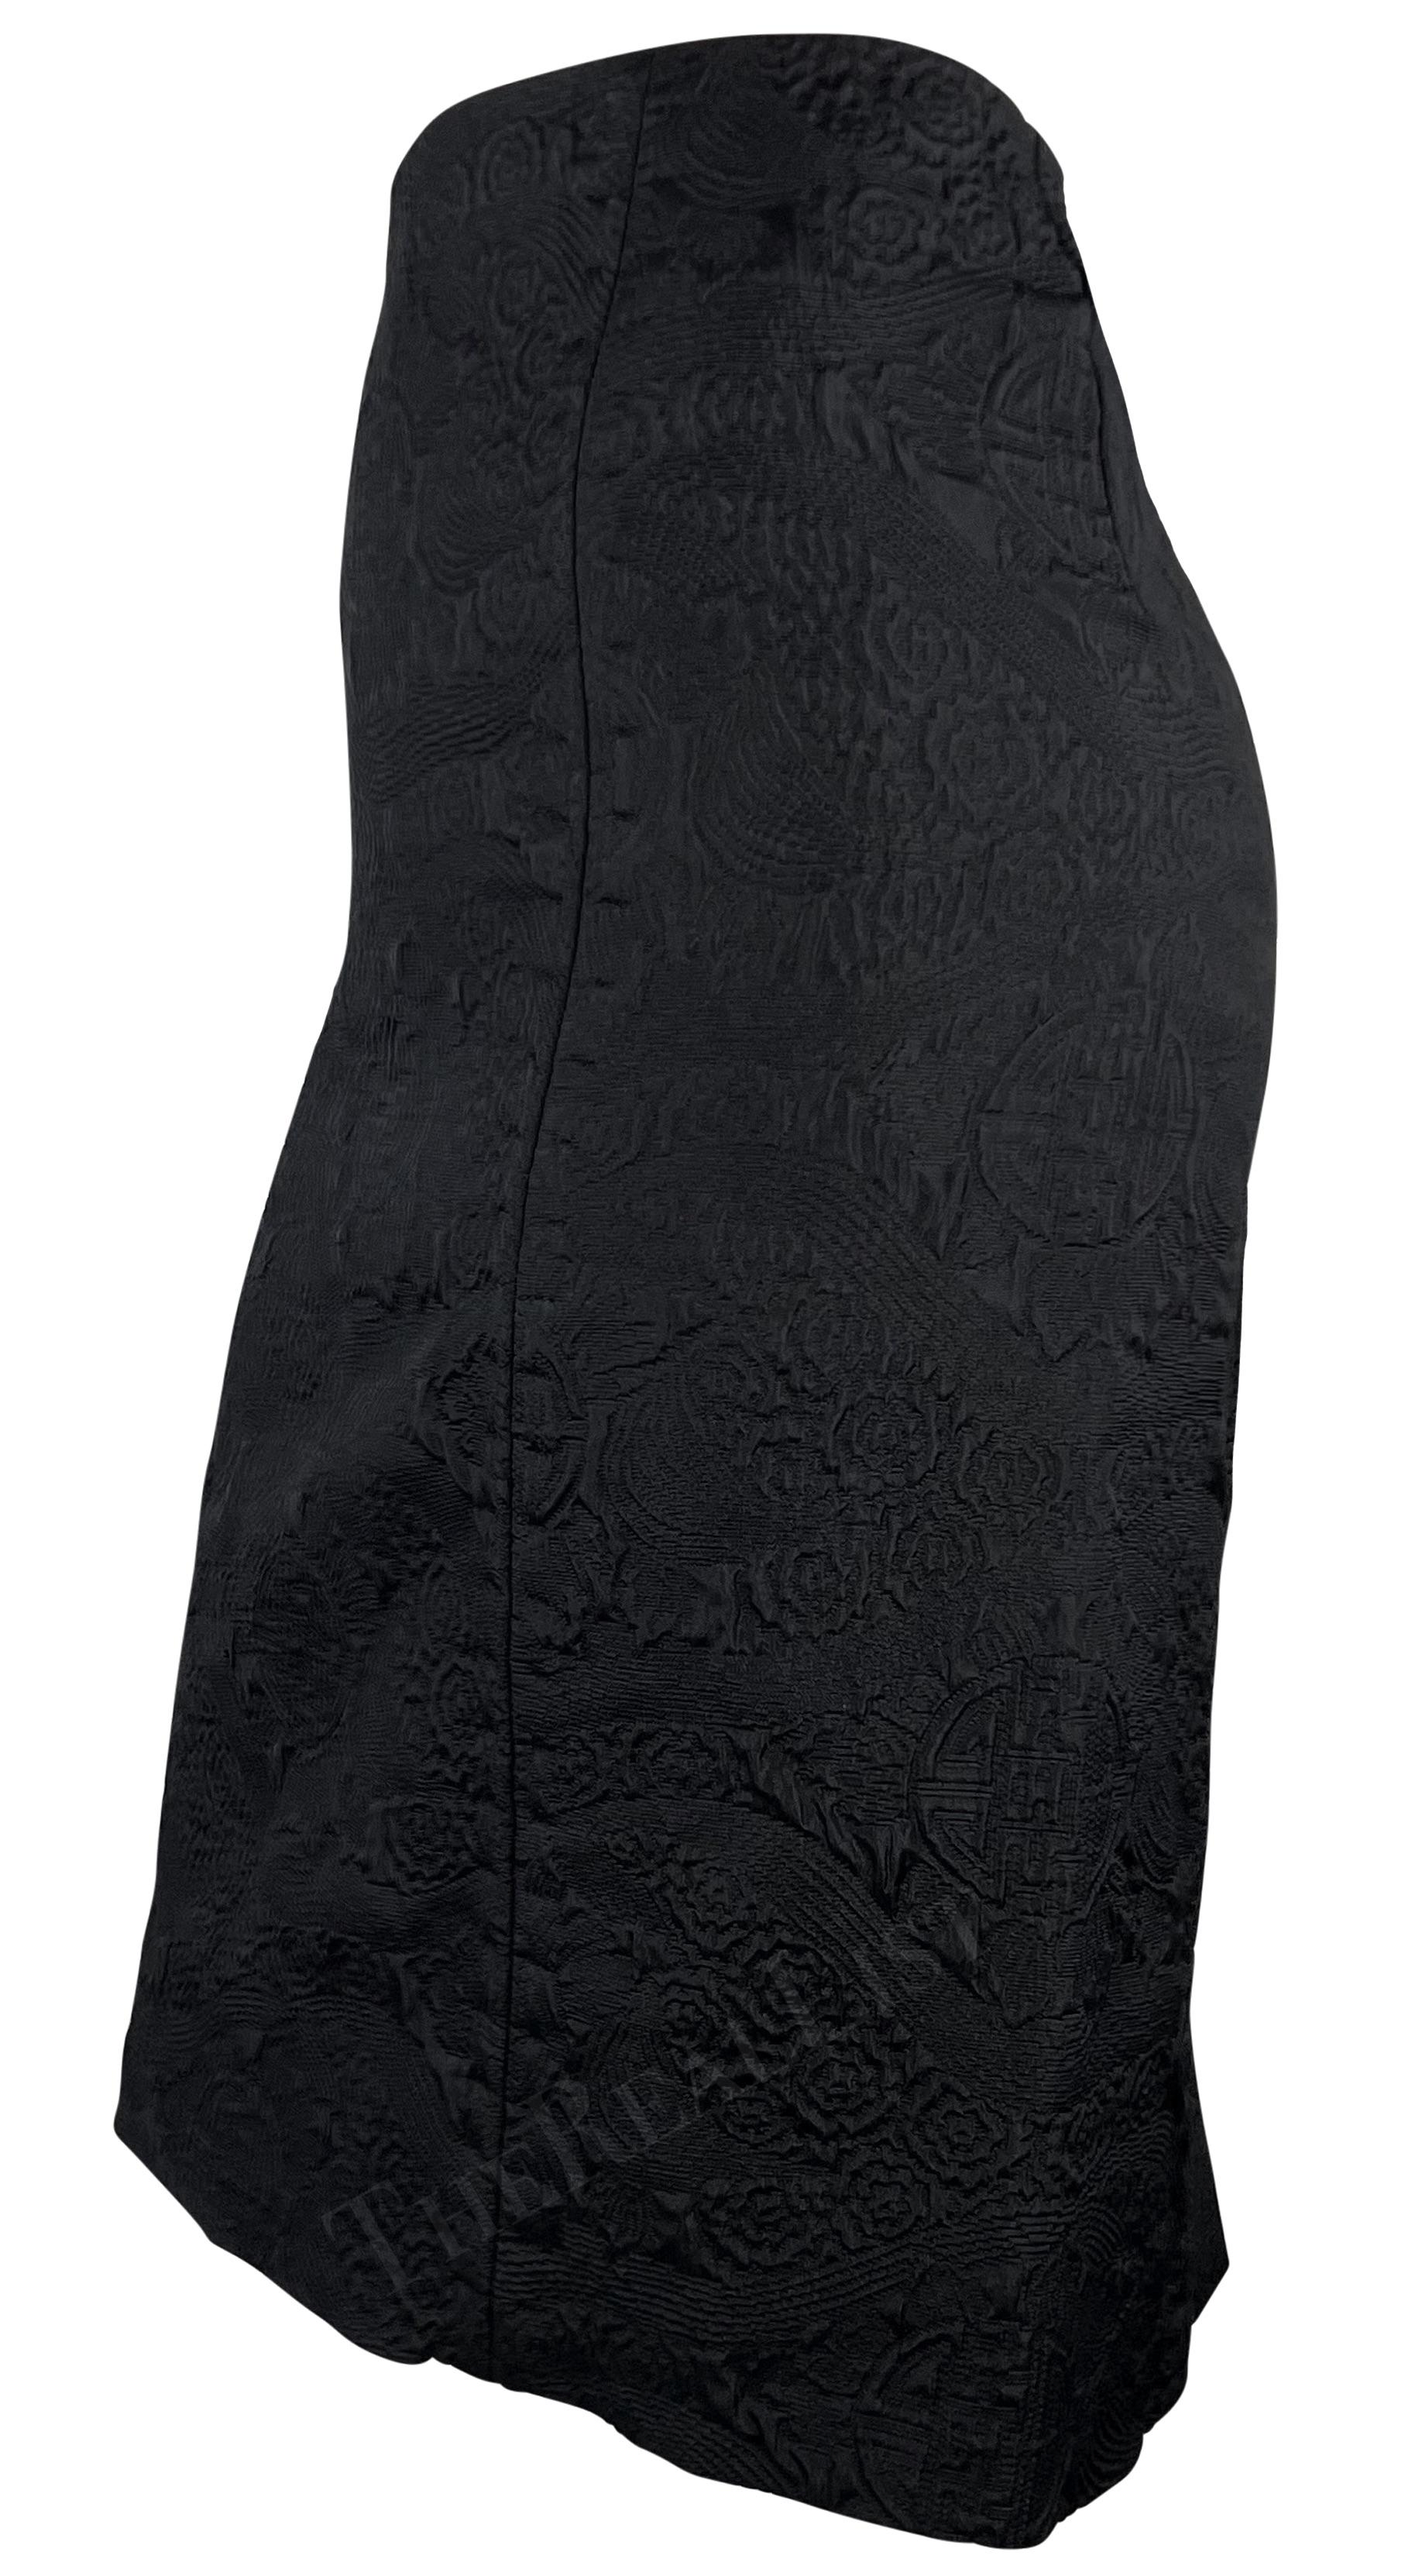 Women's F/W 2004 Yves Saint Laurent by Tom Ford Chinoiserie Brocade Black Skirt For Sale